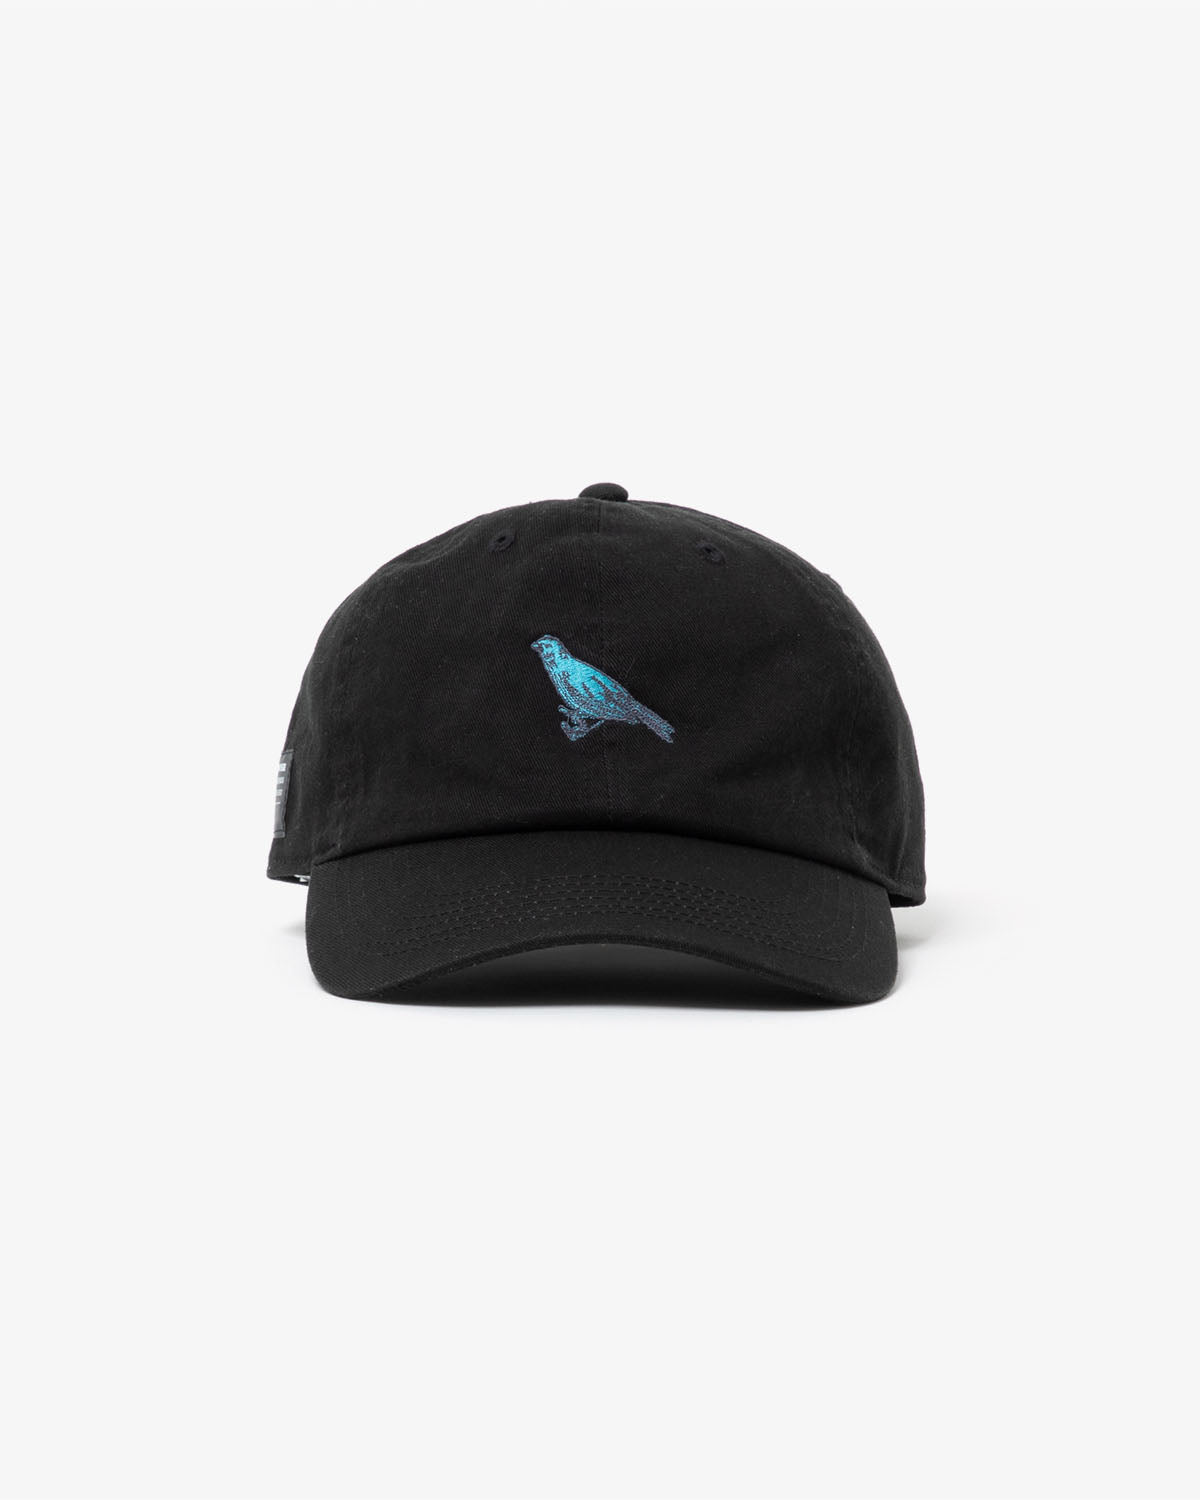 ”BIRDER TOURS” CAP